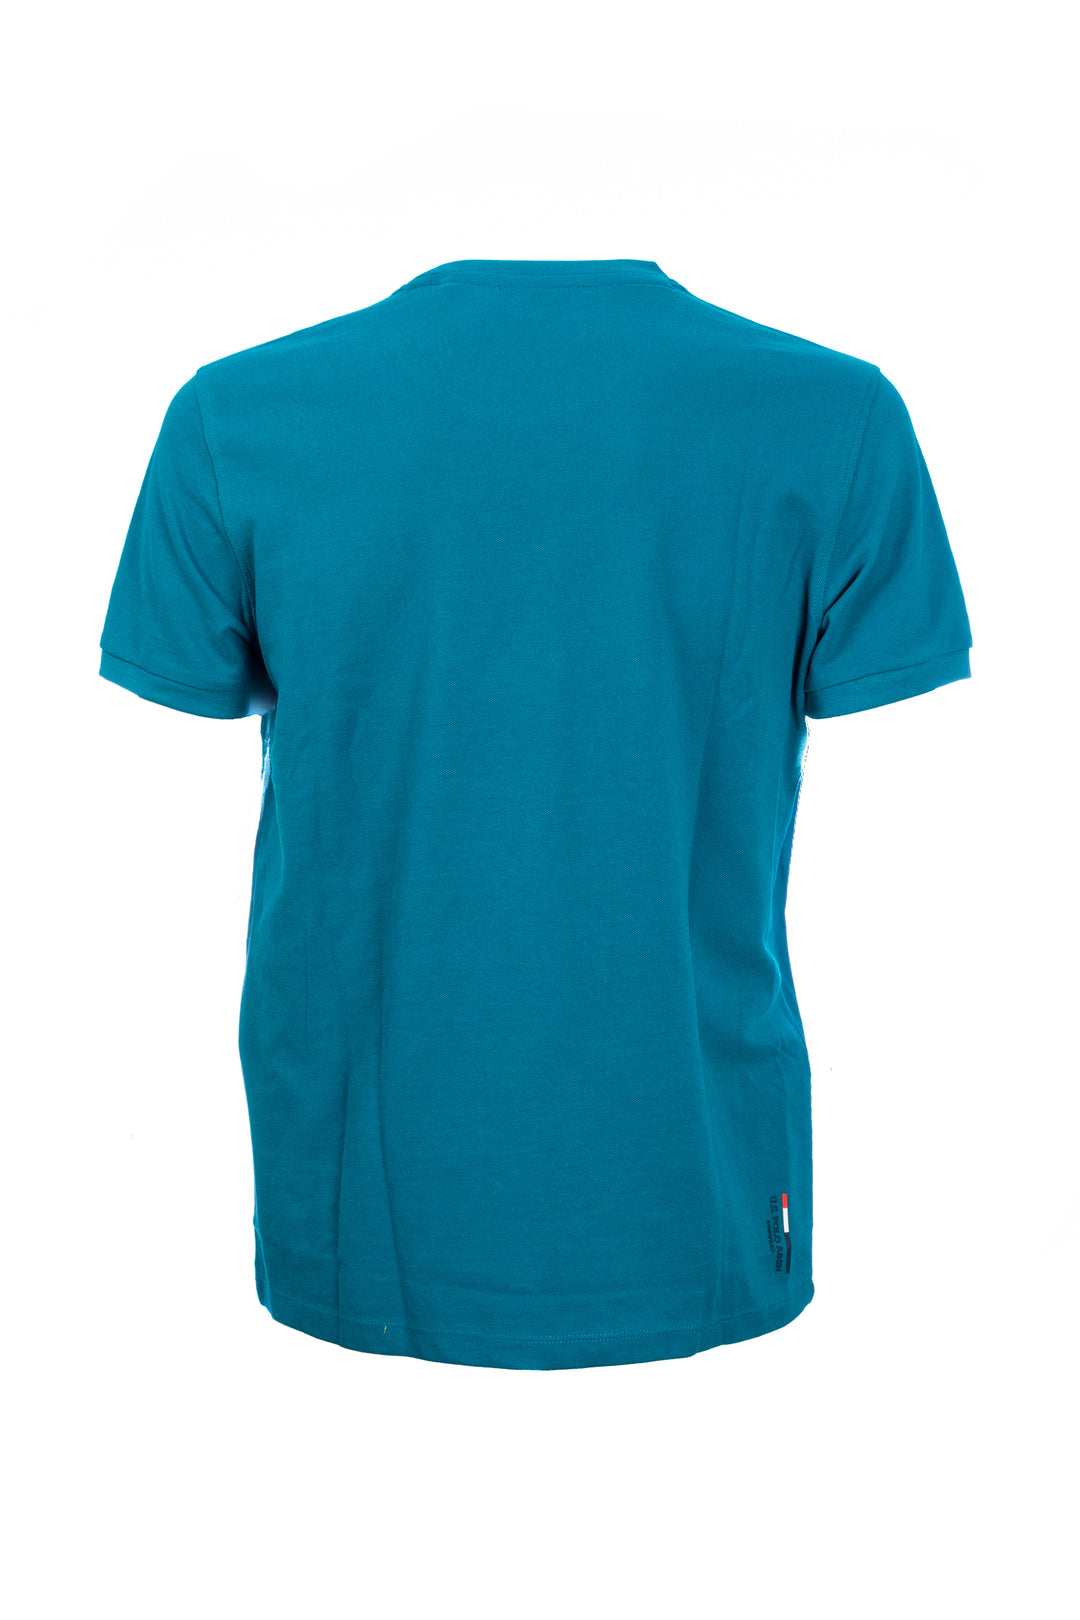 U.S. POLO ASSN. BEACHWEAR T-shirt ottanio in cotone con logo ricamato - Mancinelli 1954